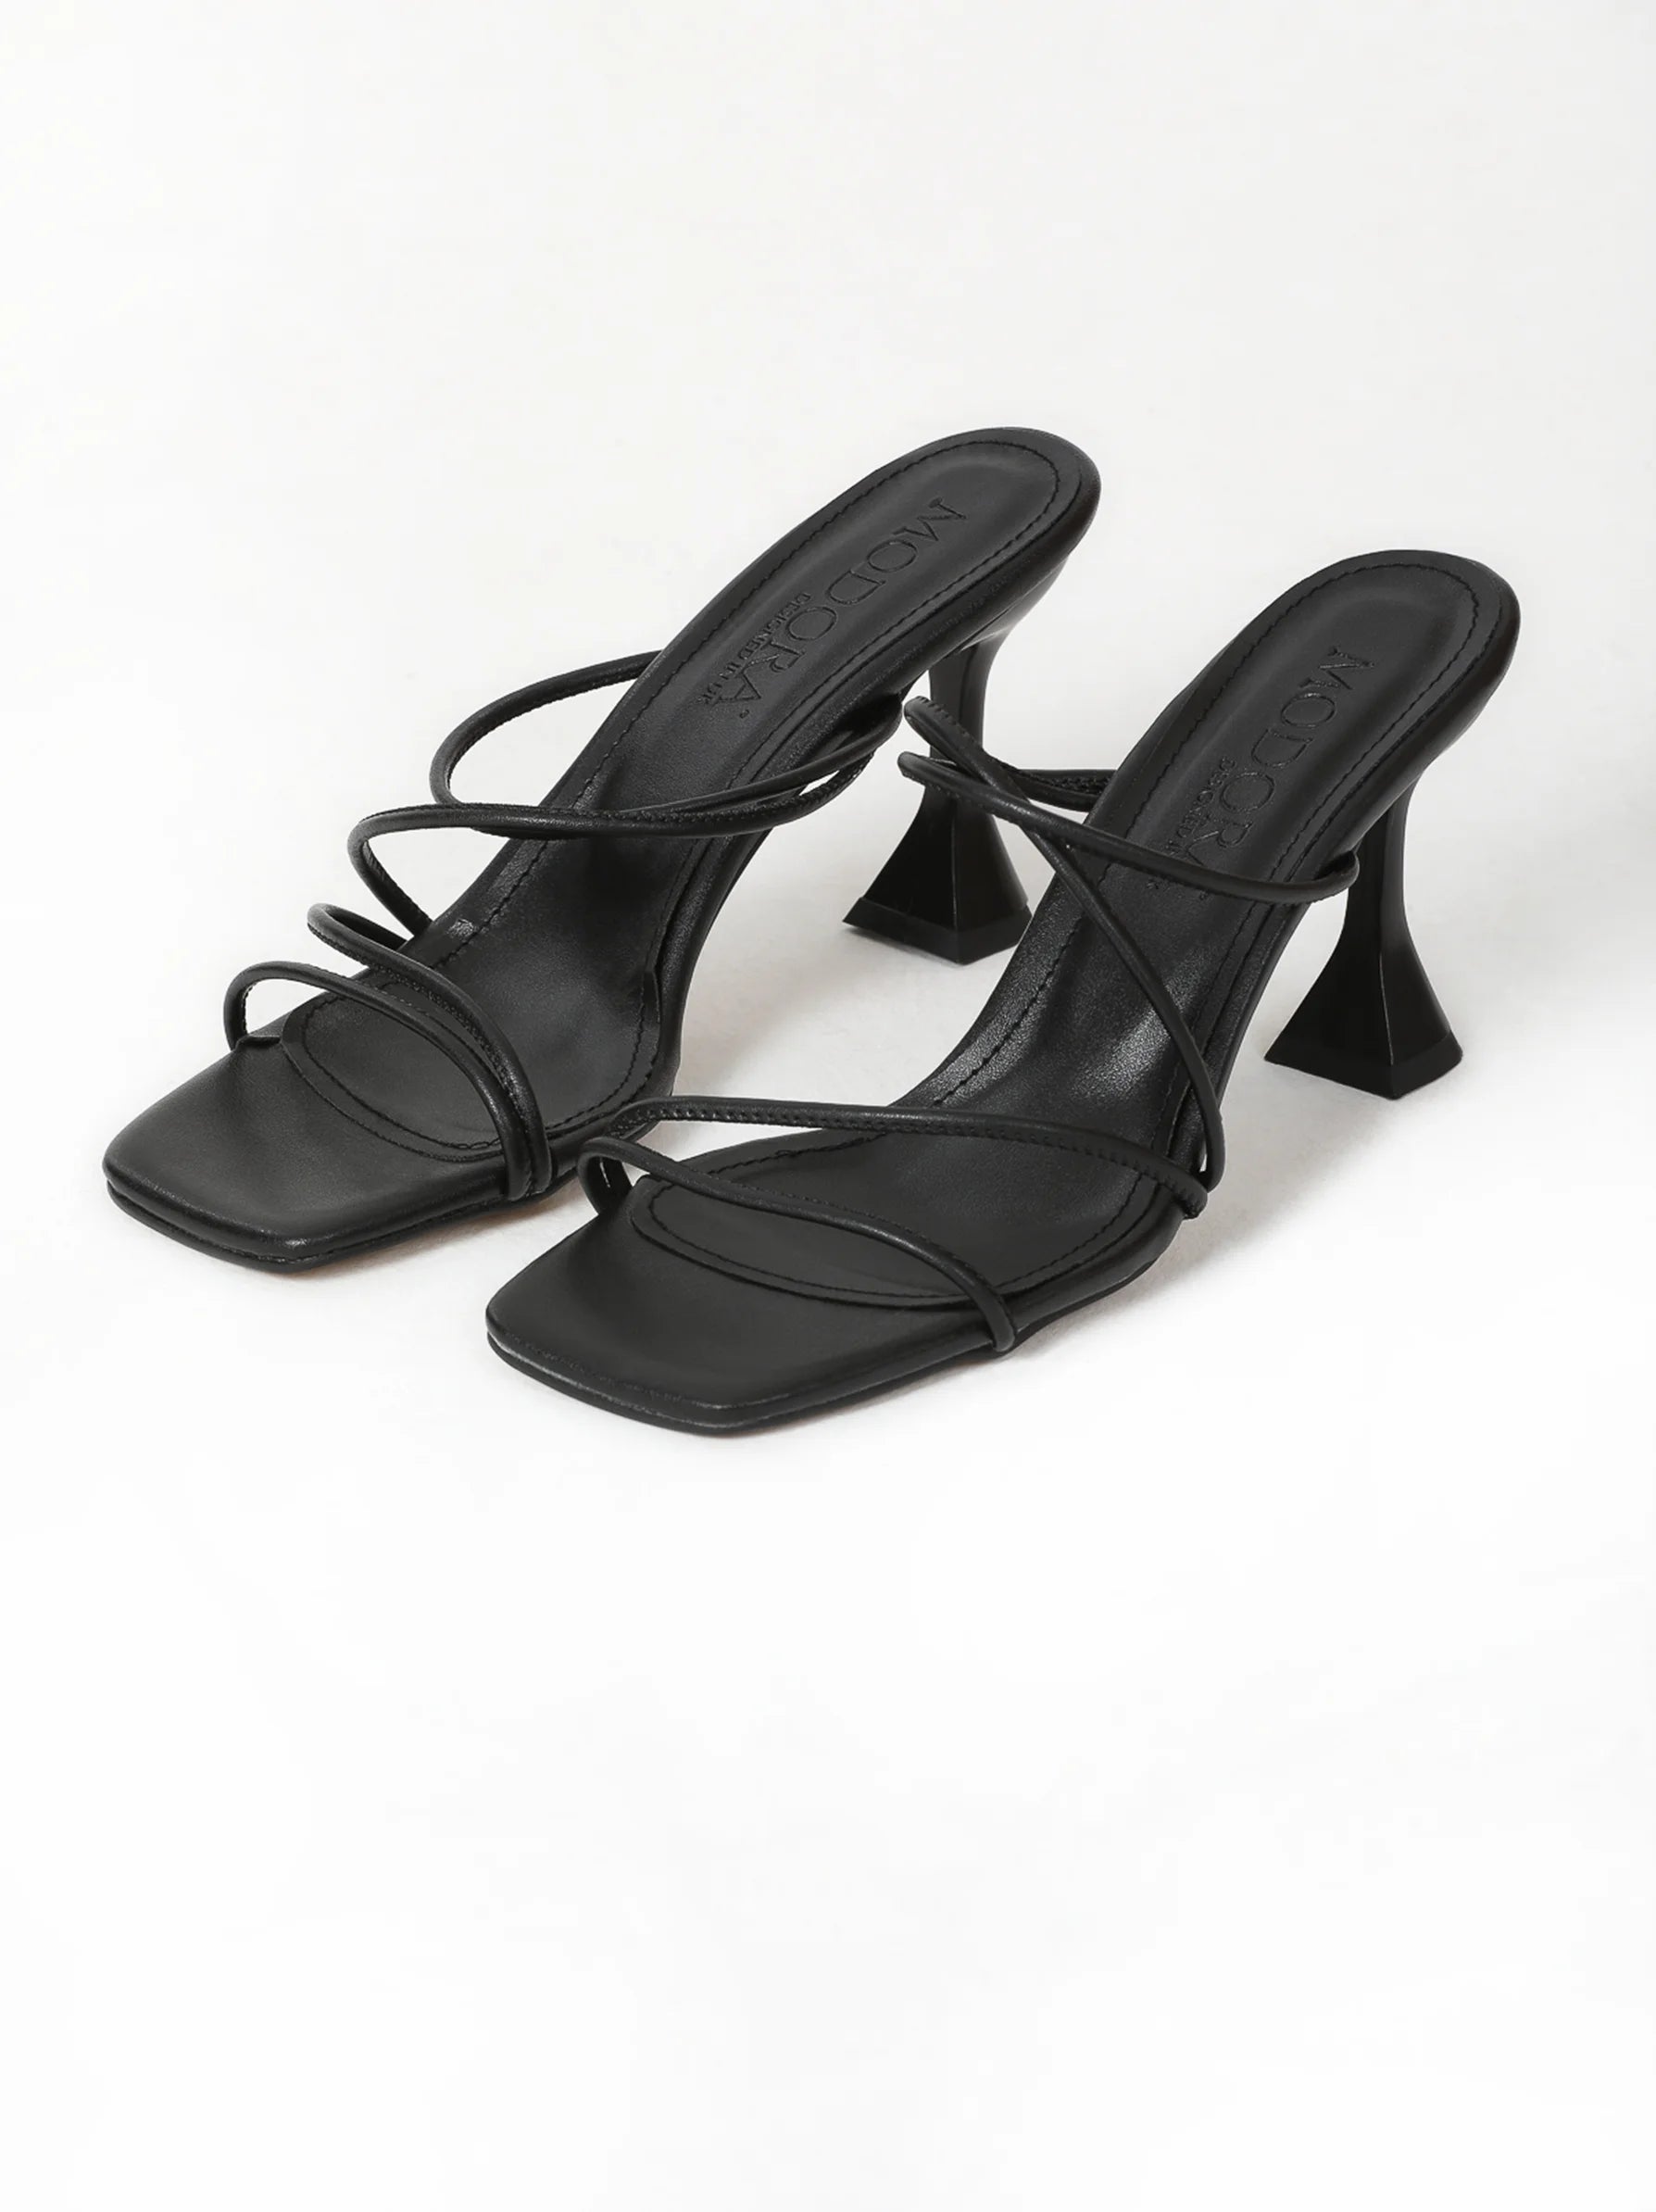 Saks Fifth Avenue Sandal heels for Women | Online Sale up to 78% off | Lyst